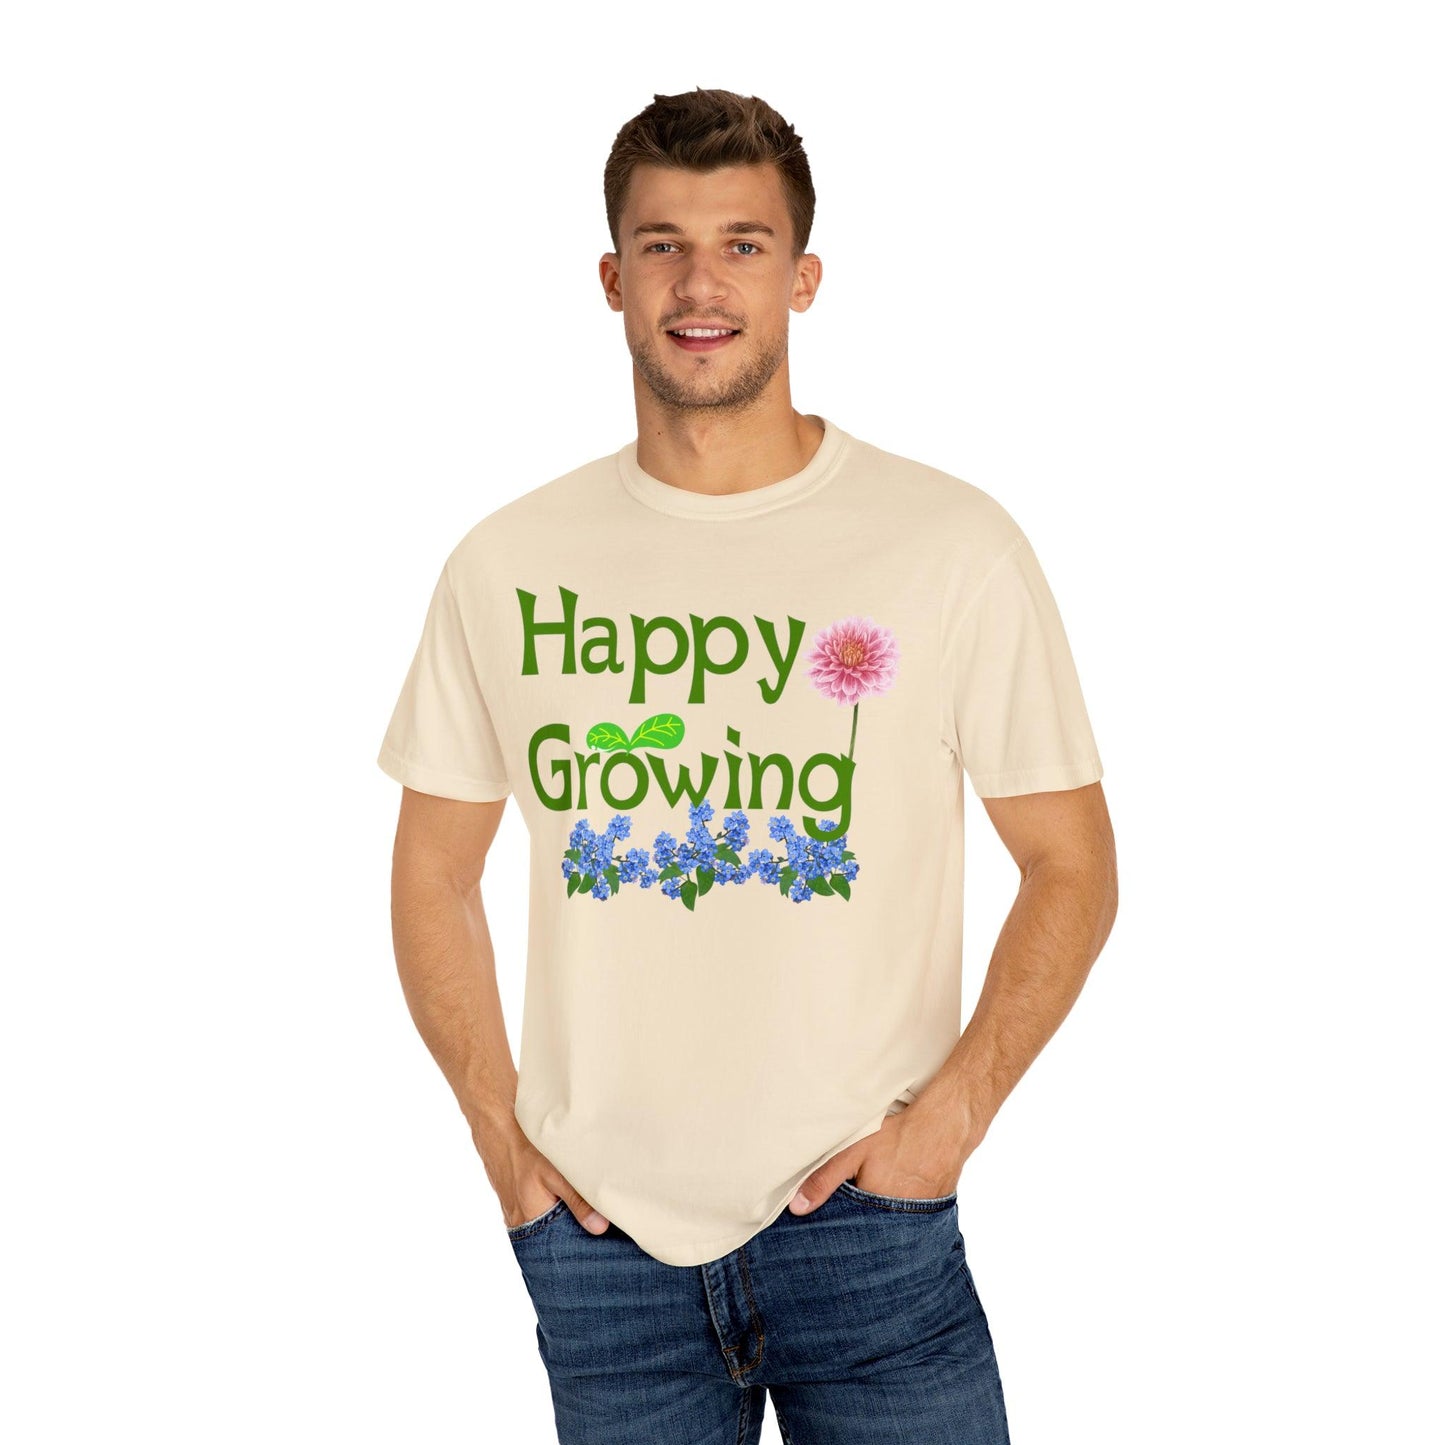 Farming shirt for farmers, Gift for her, Gardener gift for farm lover, Floral shirts for mom, Plant mom shirt, Gifts for mom, Garden gift for gardeners, Nature shirt for gardeners - Giftsmojo